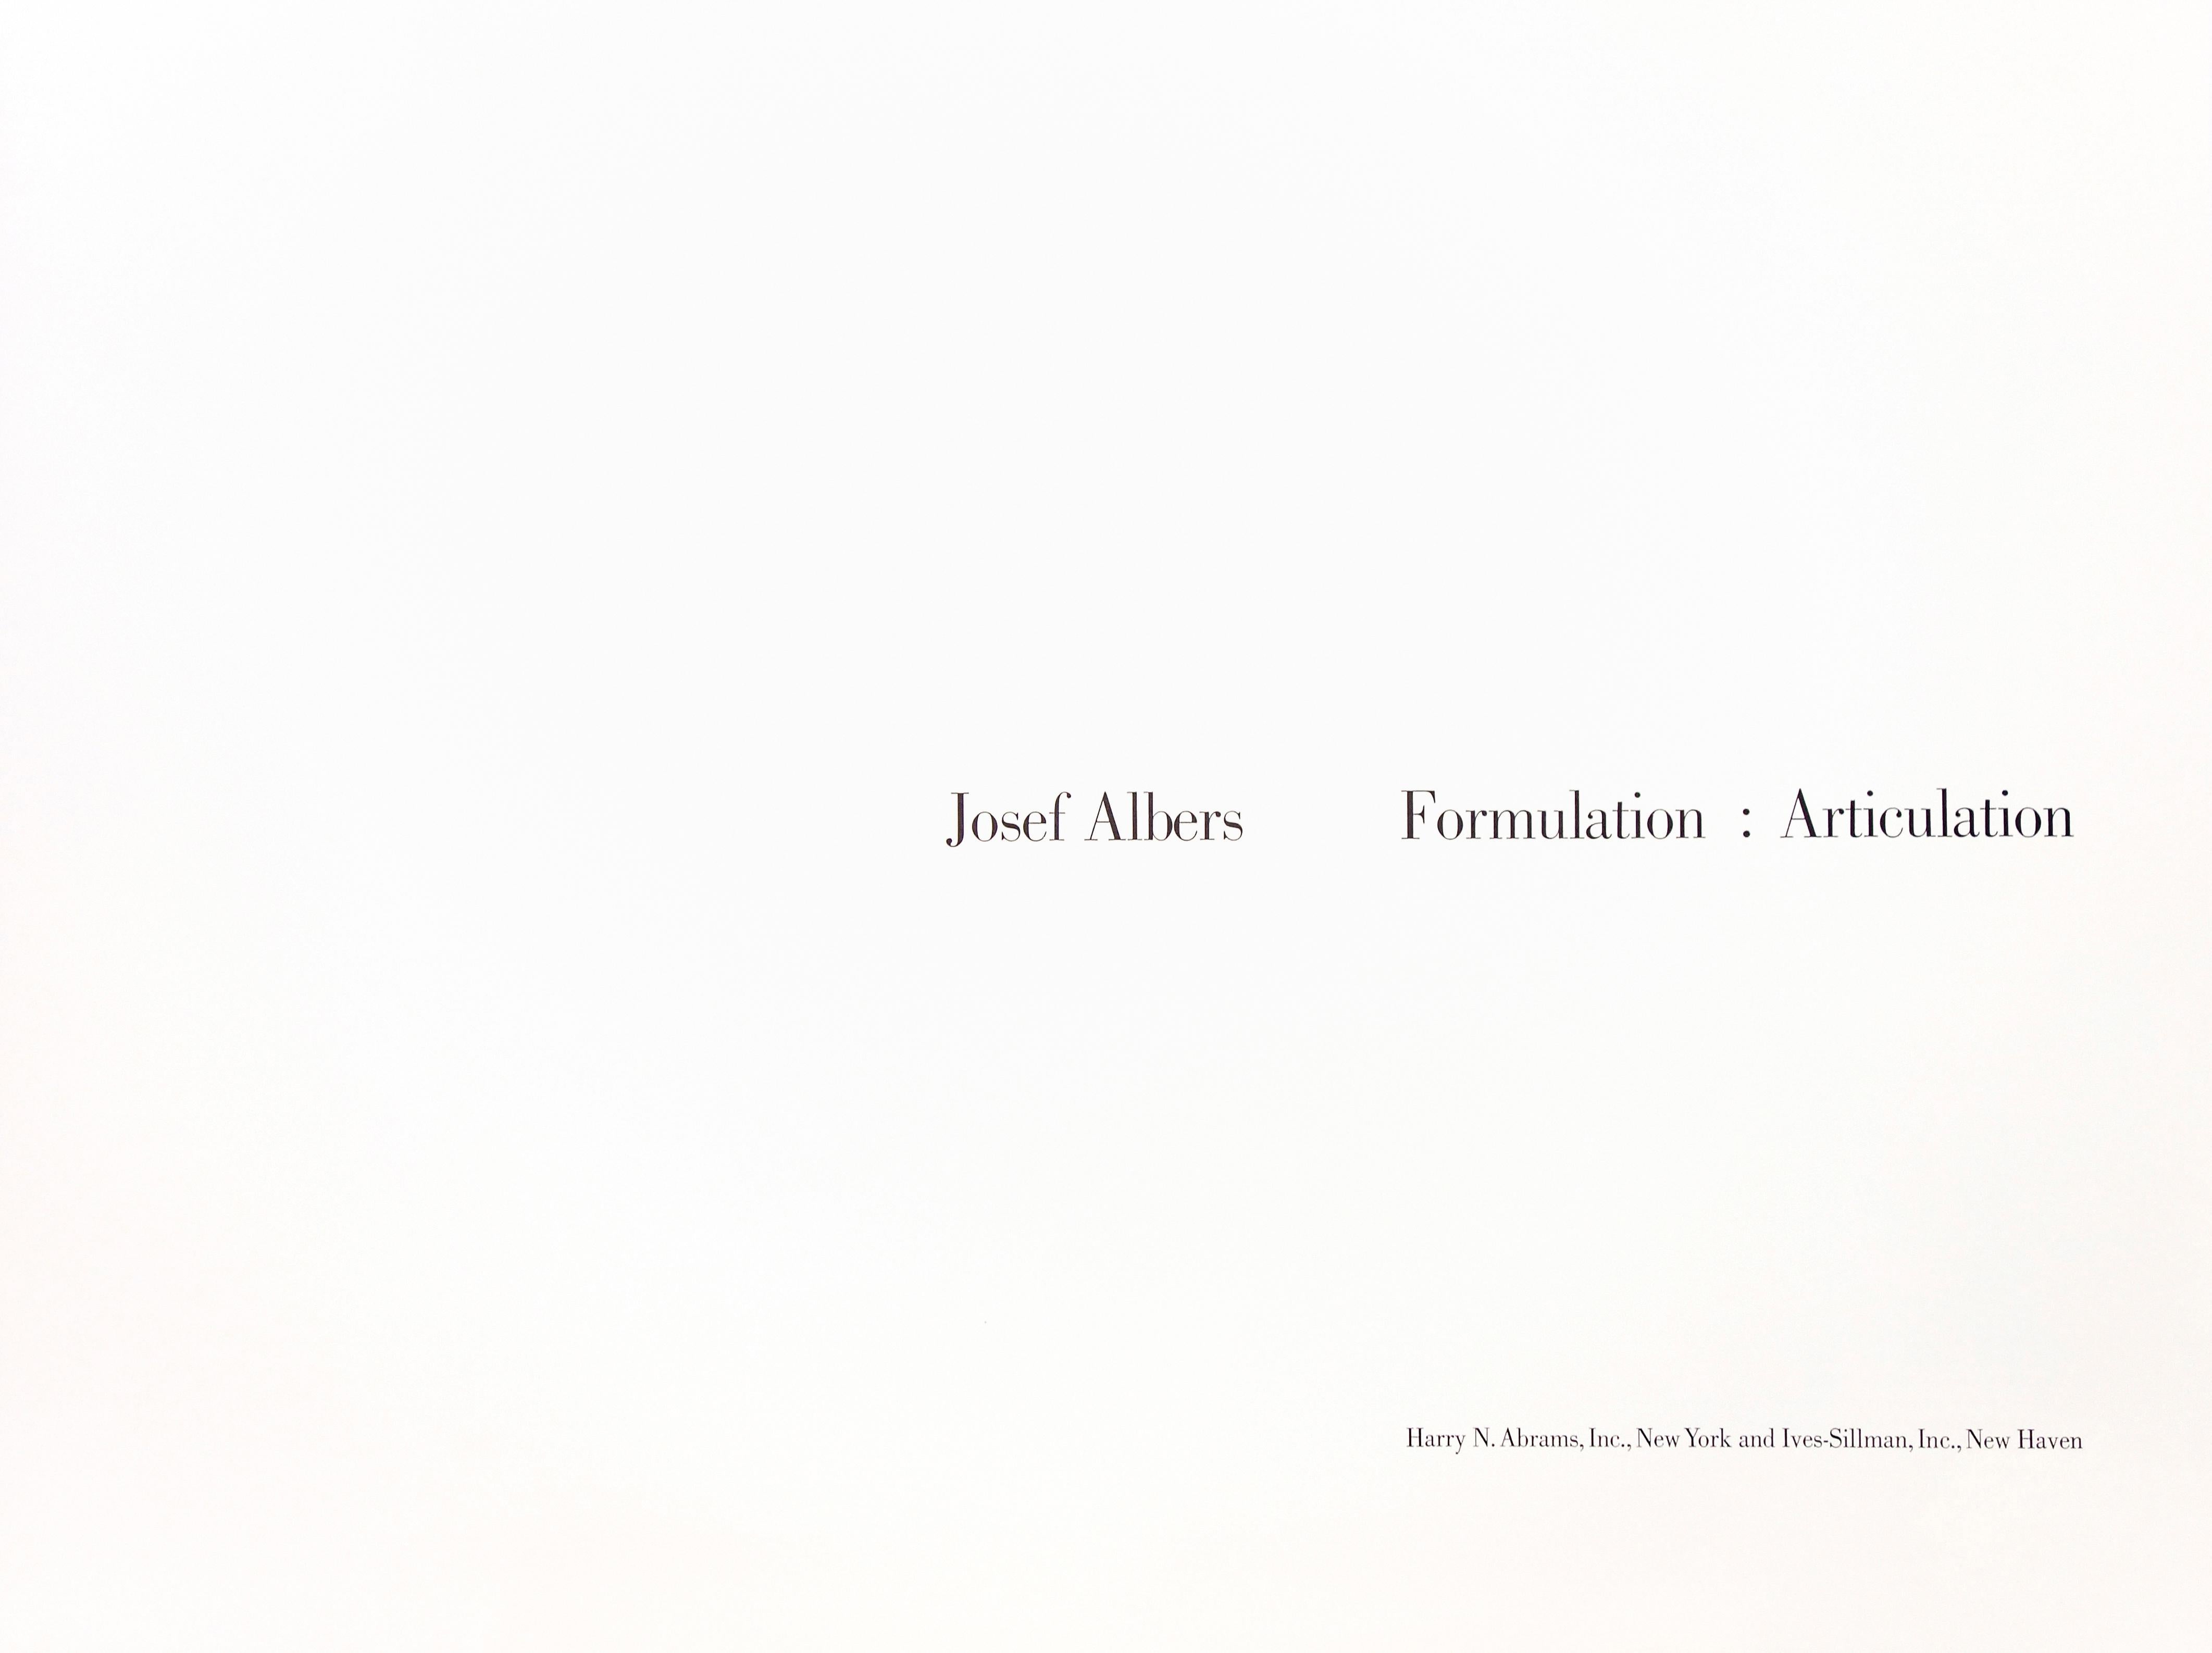 Formulation : Articulation, Portfolio I Folder 17 (A) - Abstract Print by Josef Albers